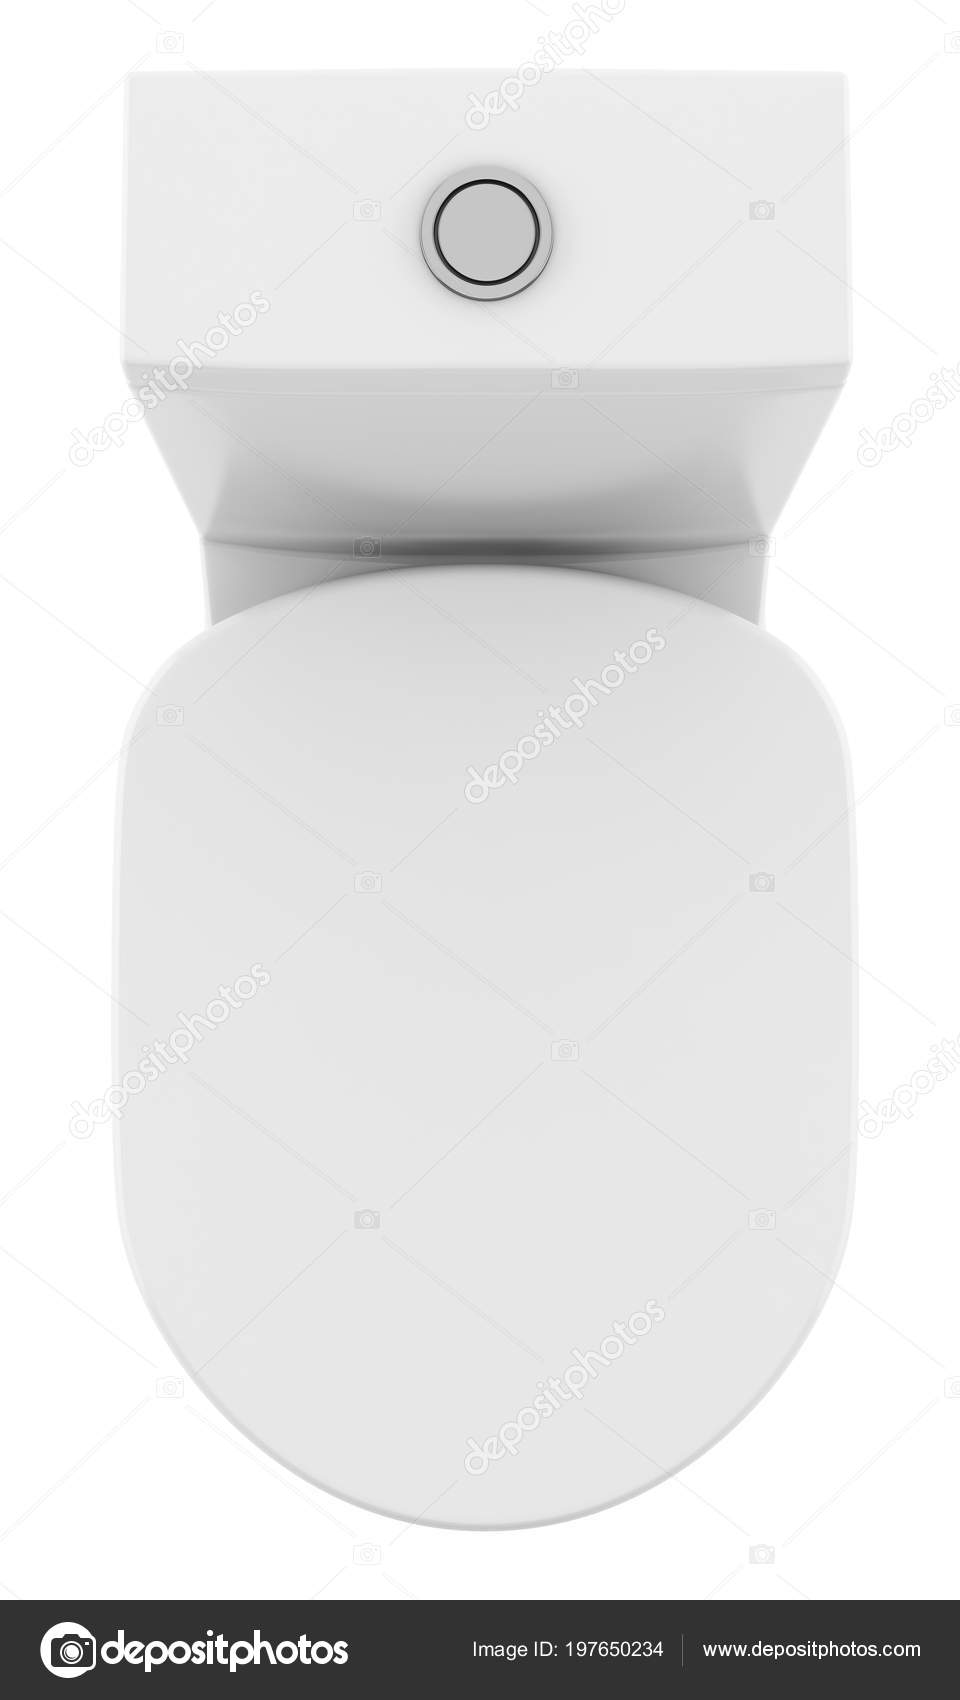 toilet seat top view